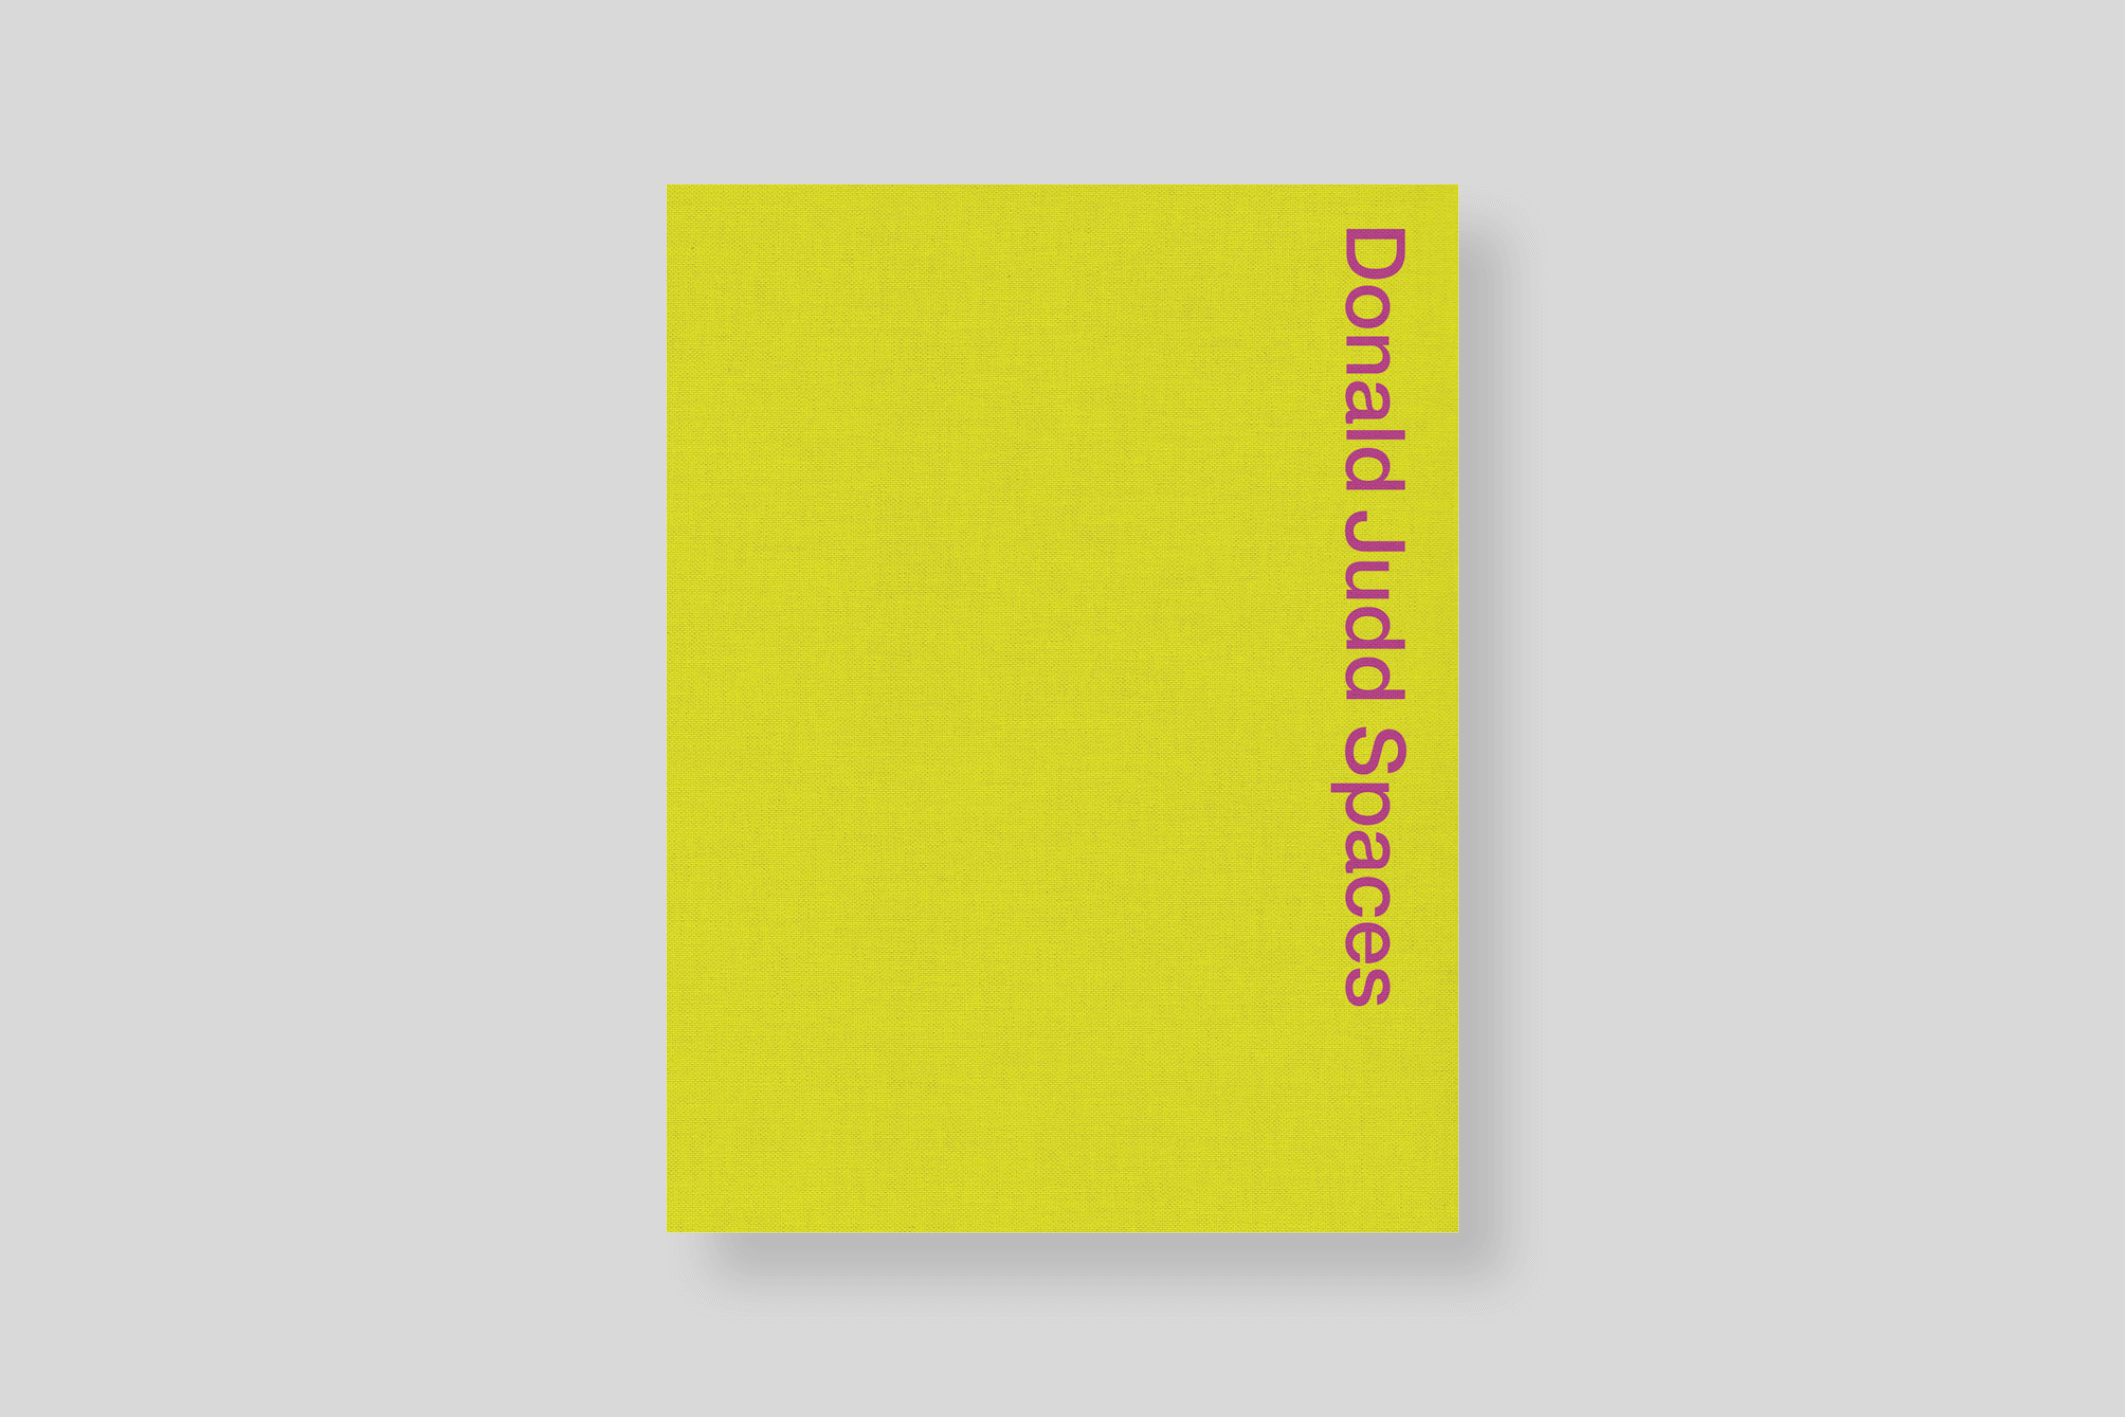 donald-judd-spaces-dap-artbook-editions-cover